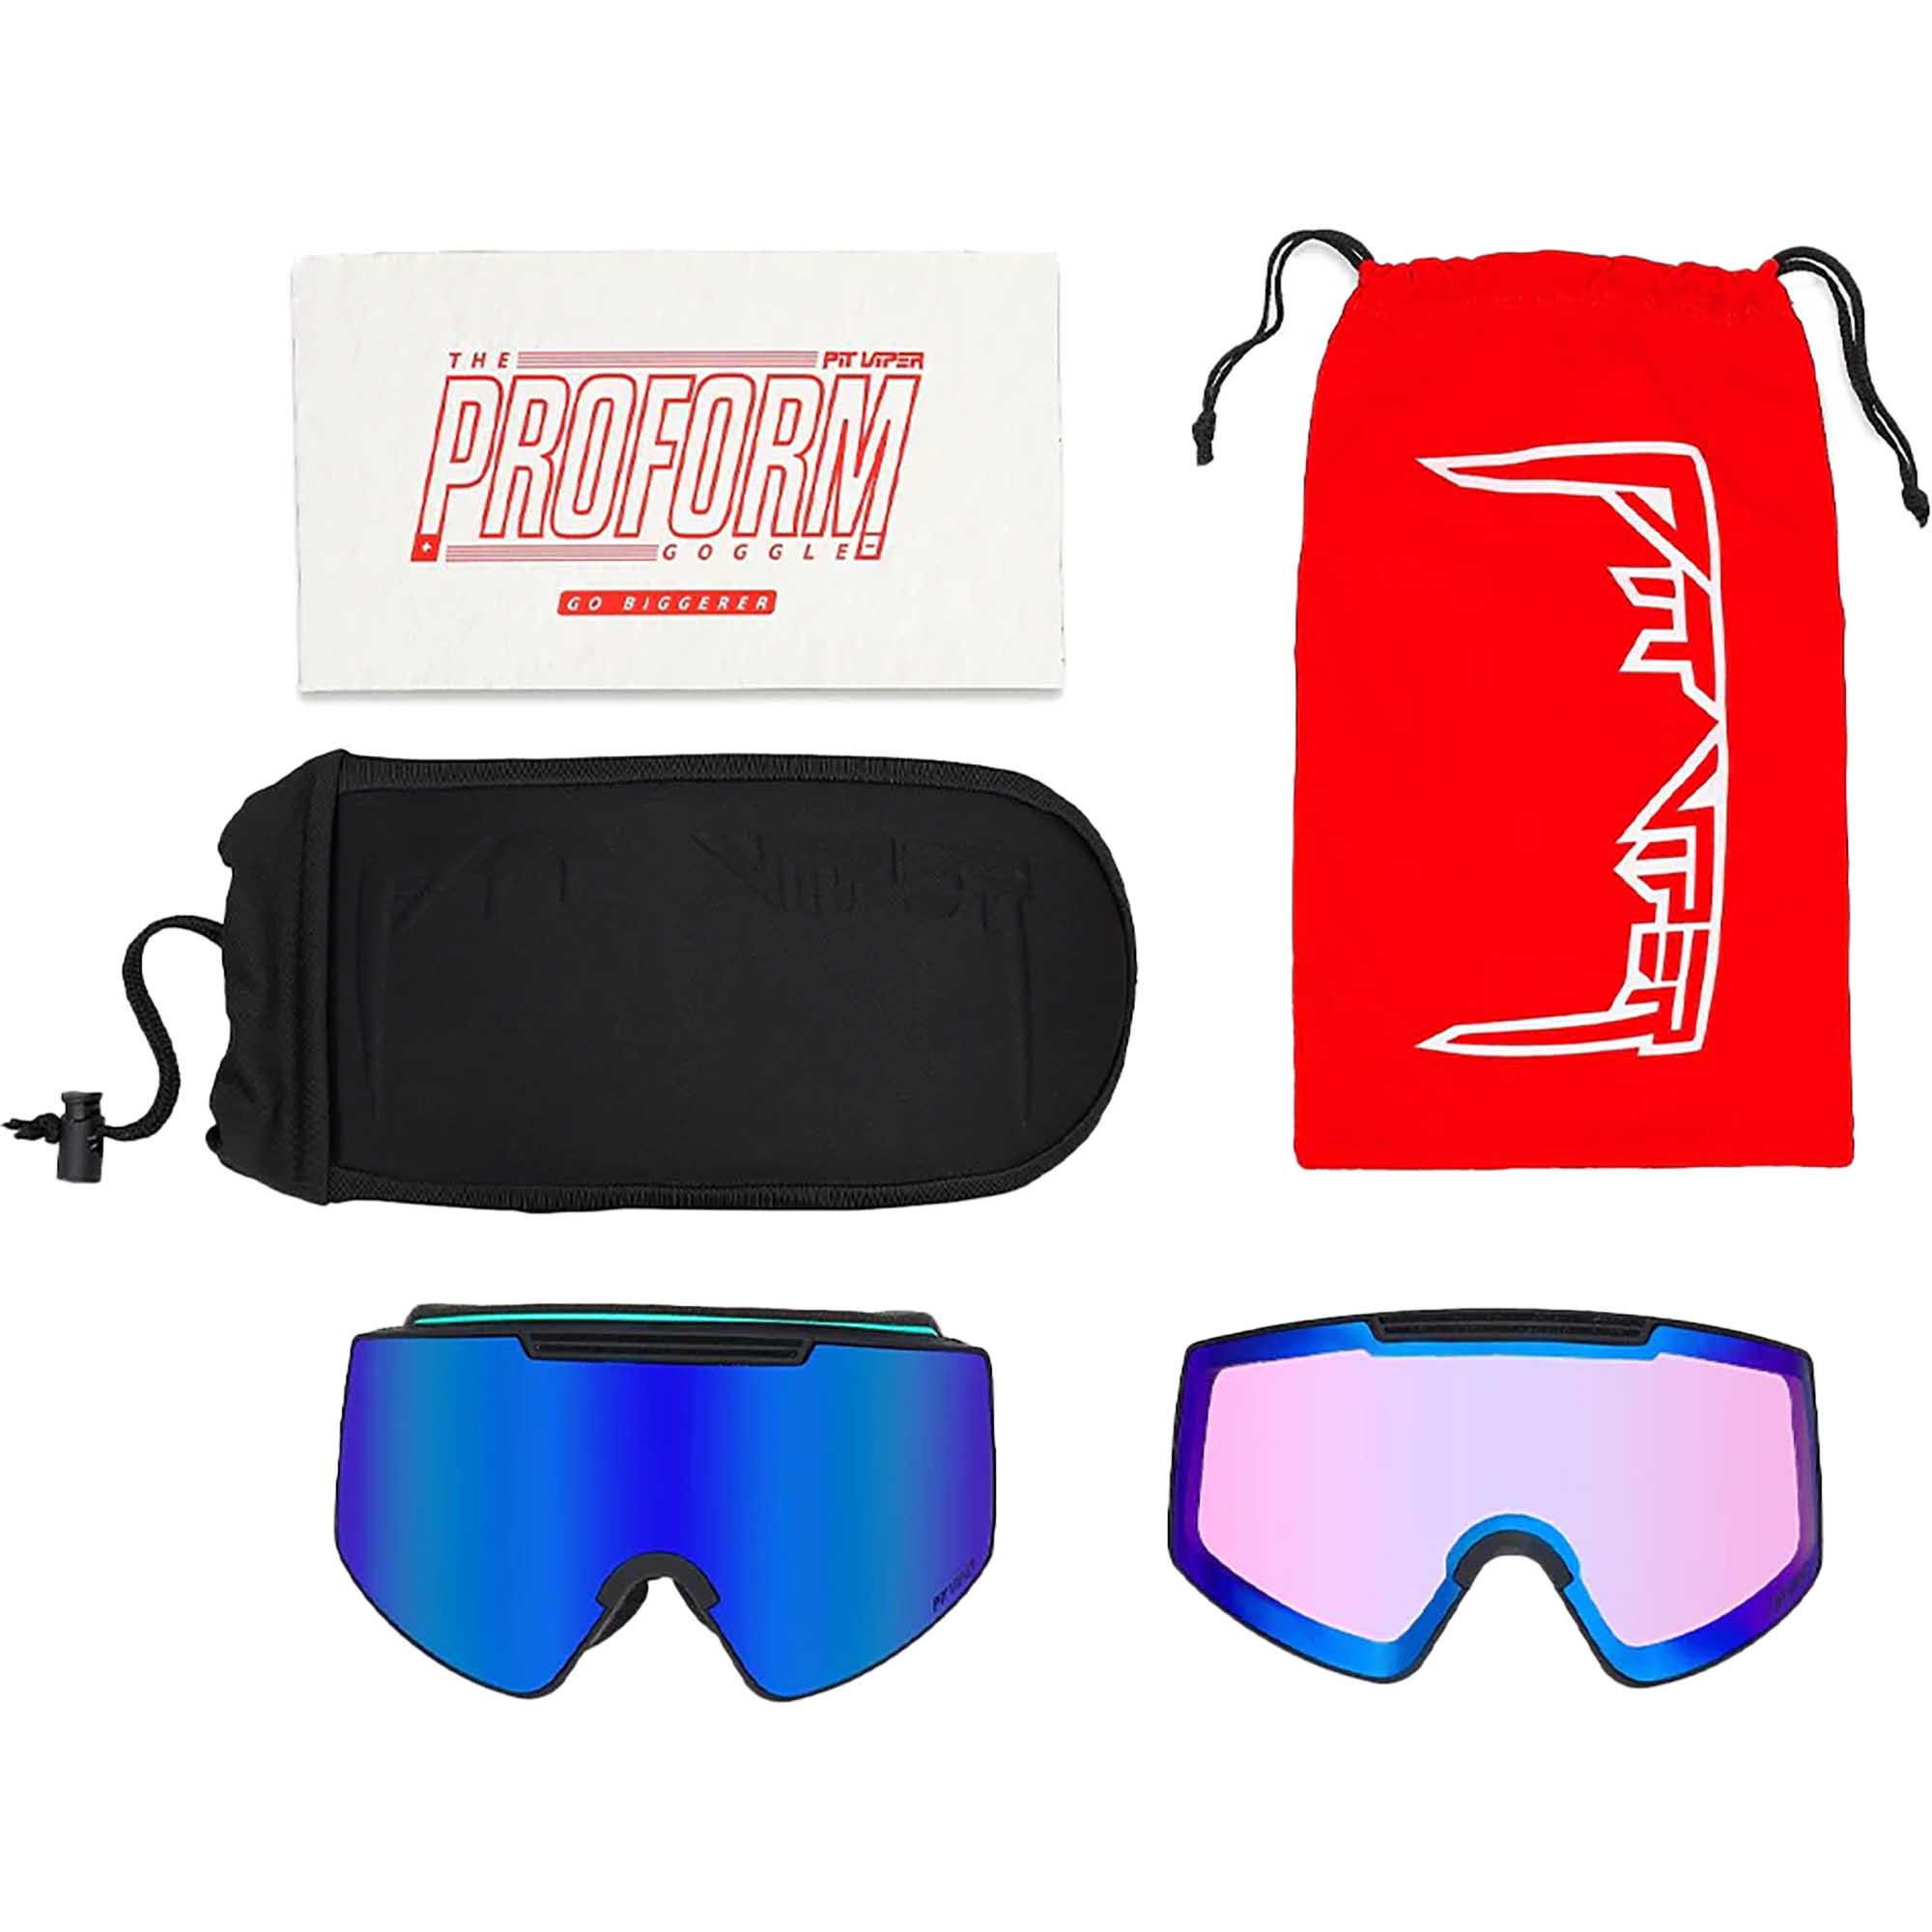 Pit Viper Proform Snowboard/Ski Goggles